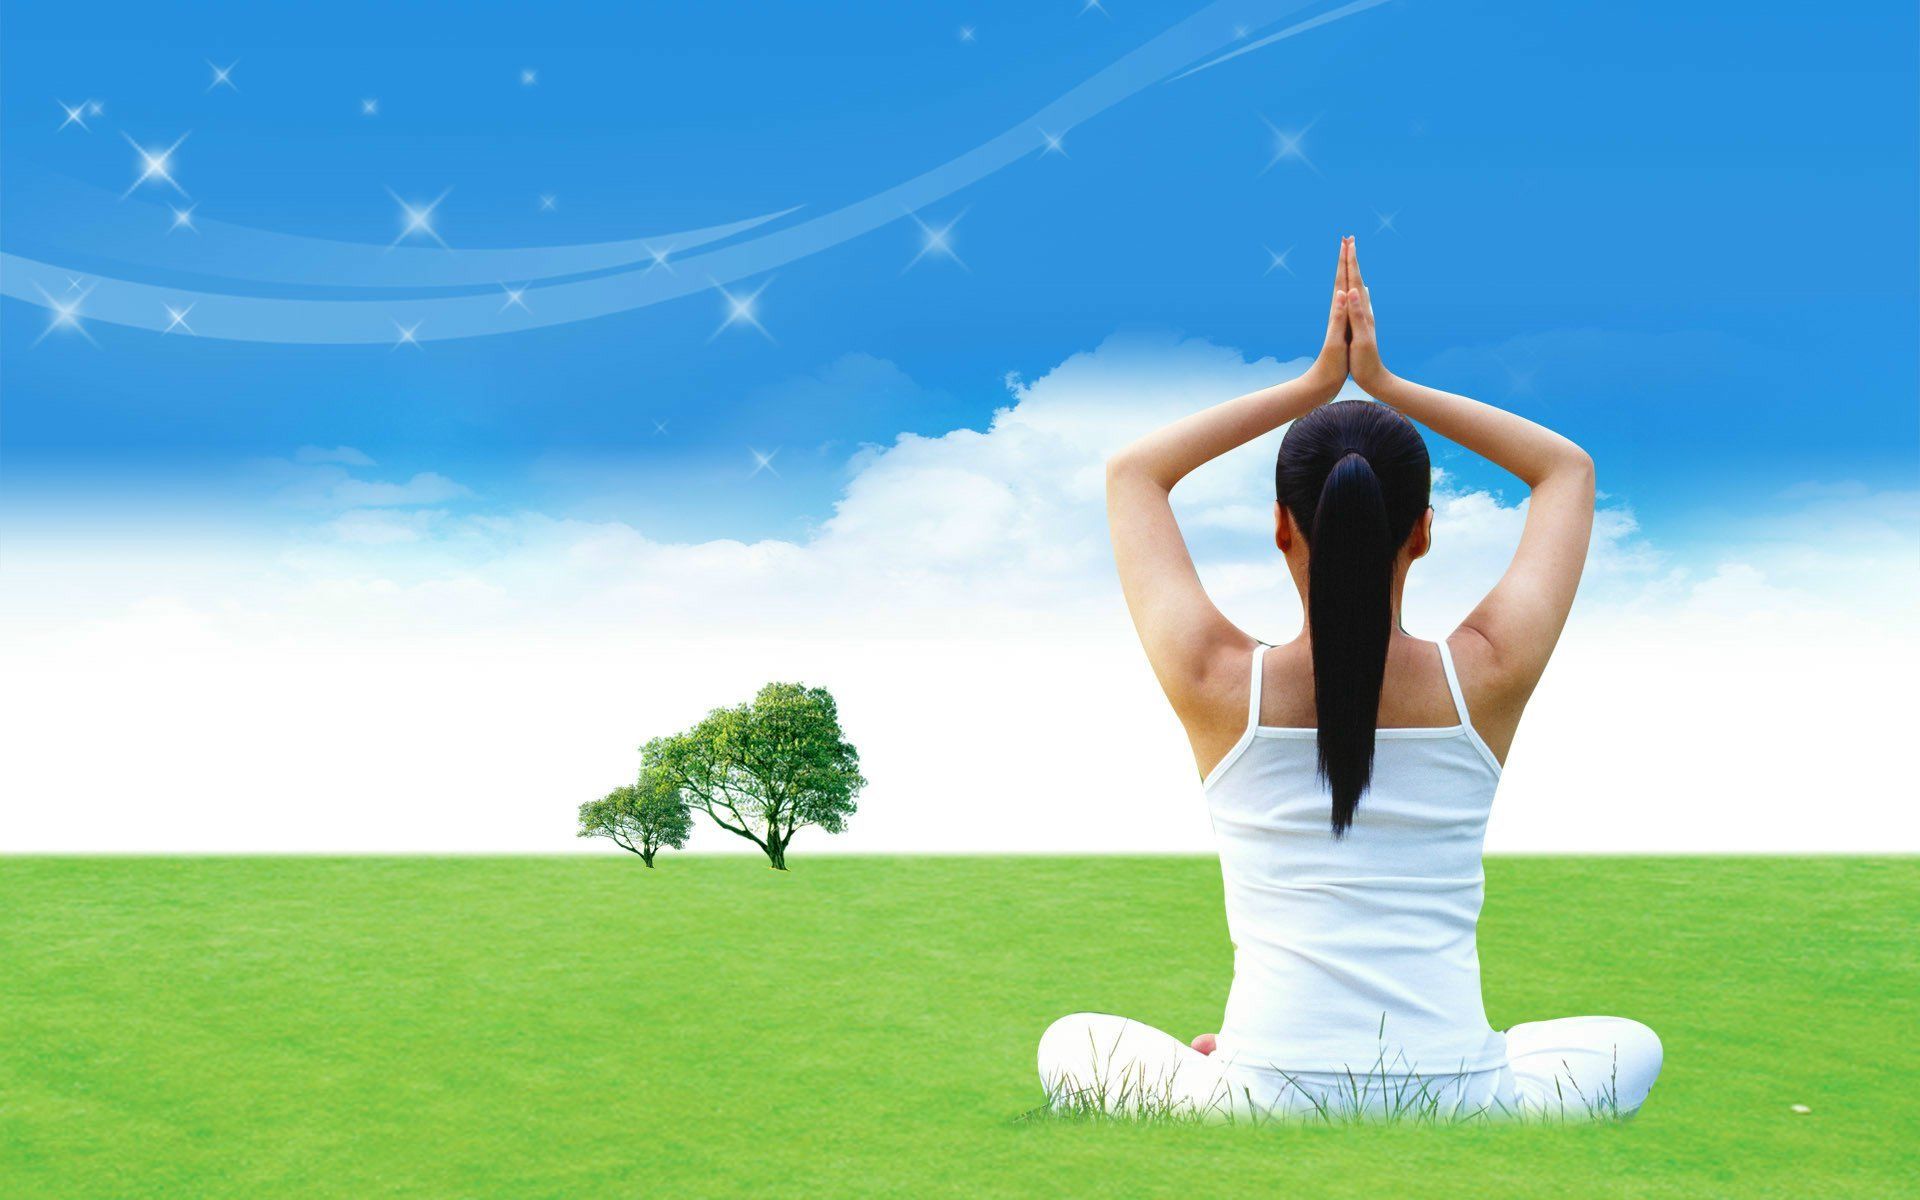 Meditation and Mindfulness Yoga: The Benefits 67